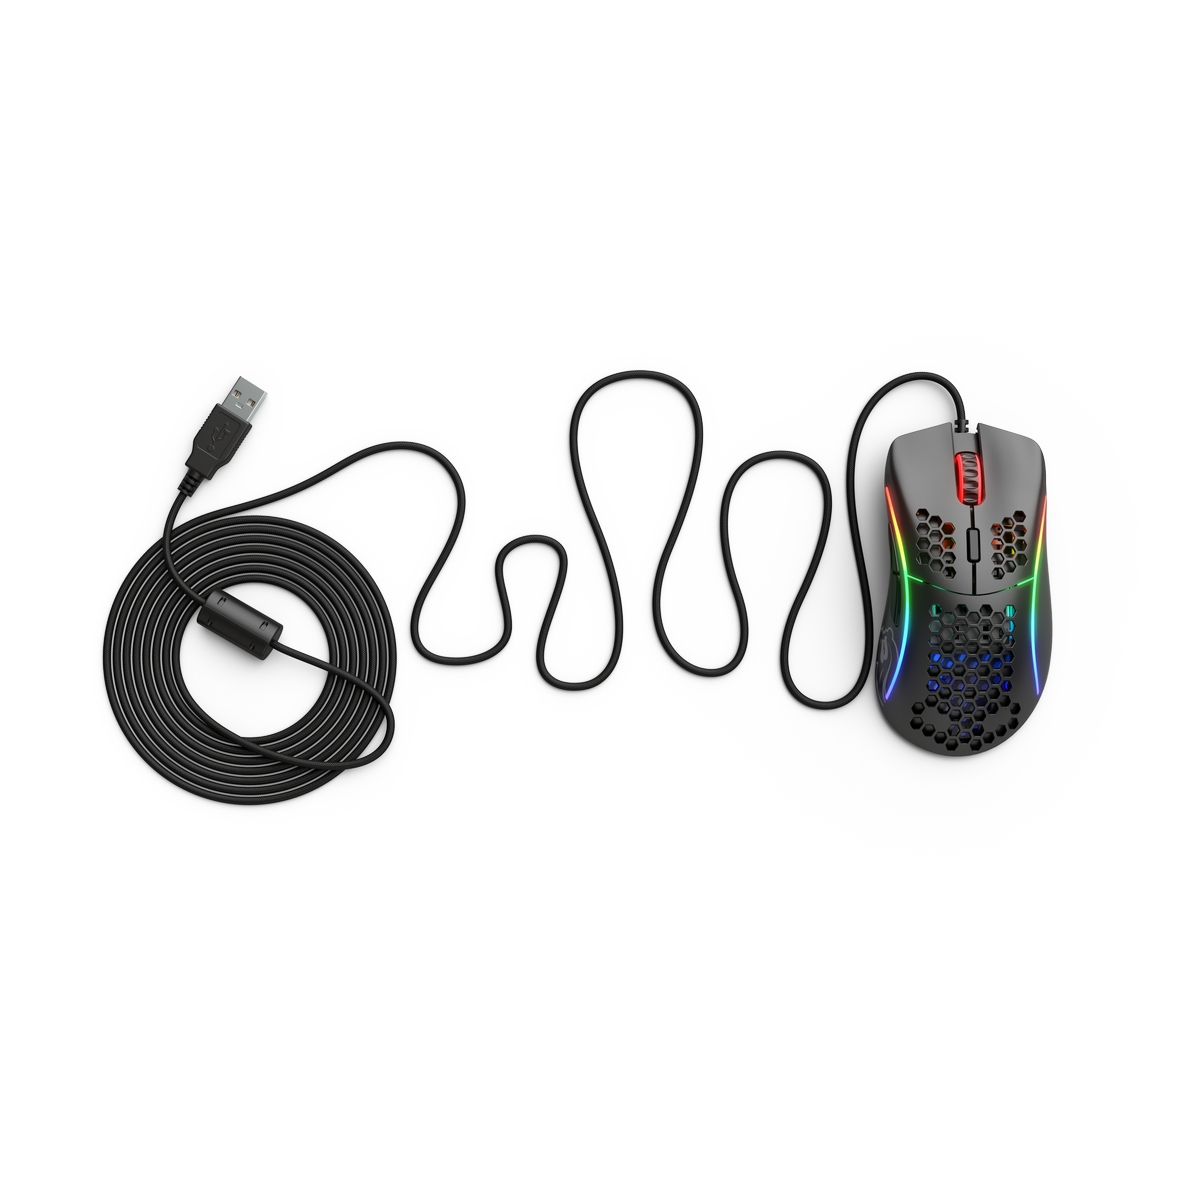 Glorious Model D USB RGB Optical Gaming Mouse - Matte Black (GD-BLACK)